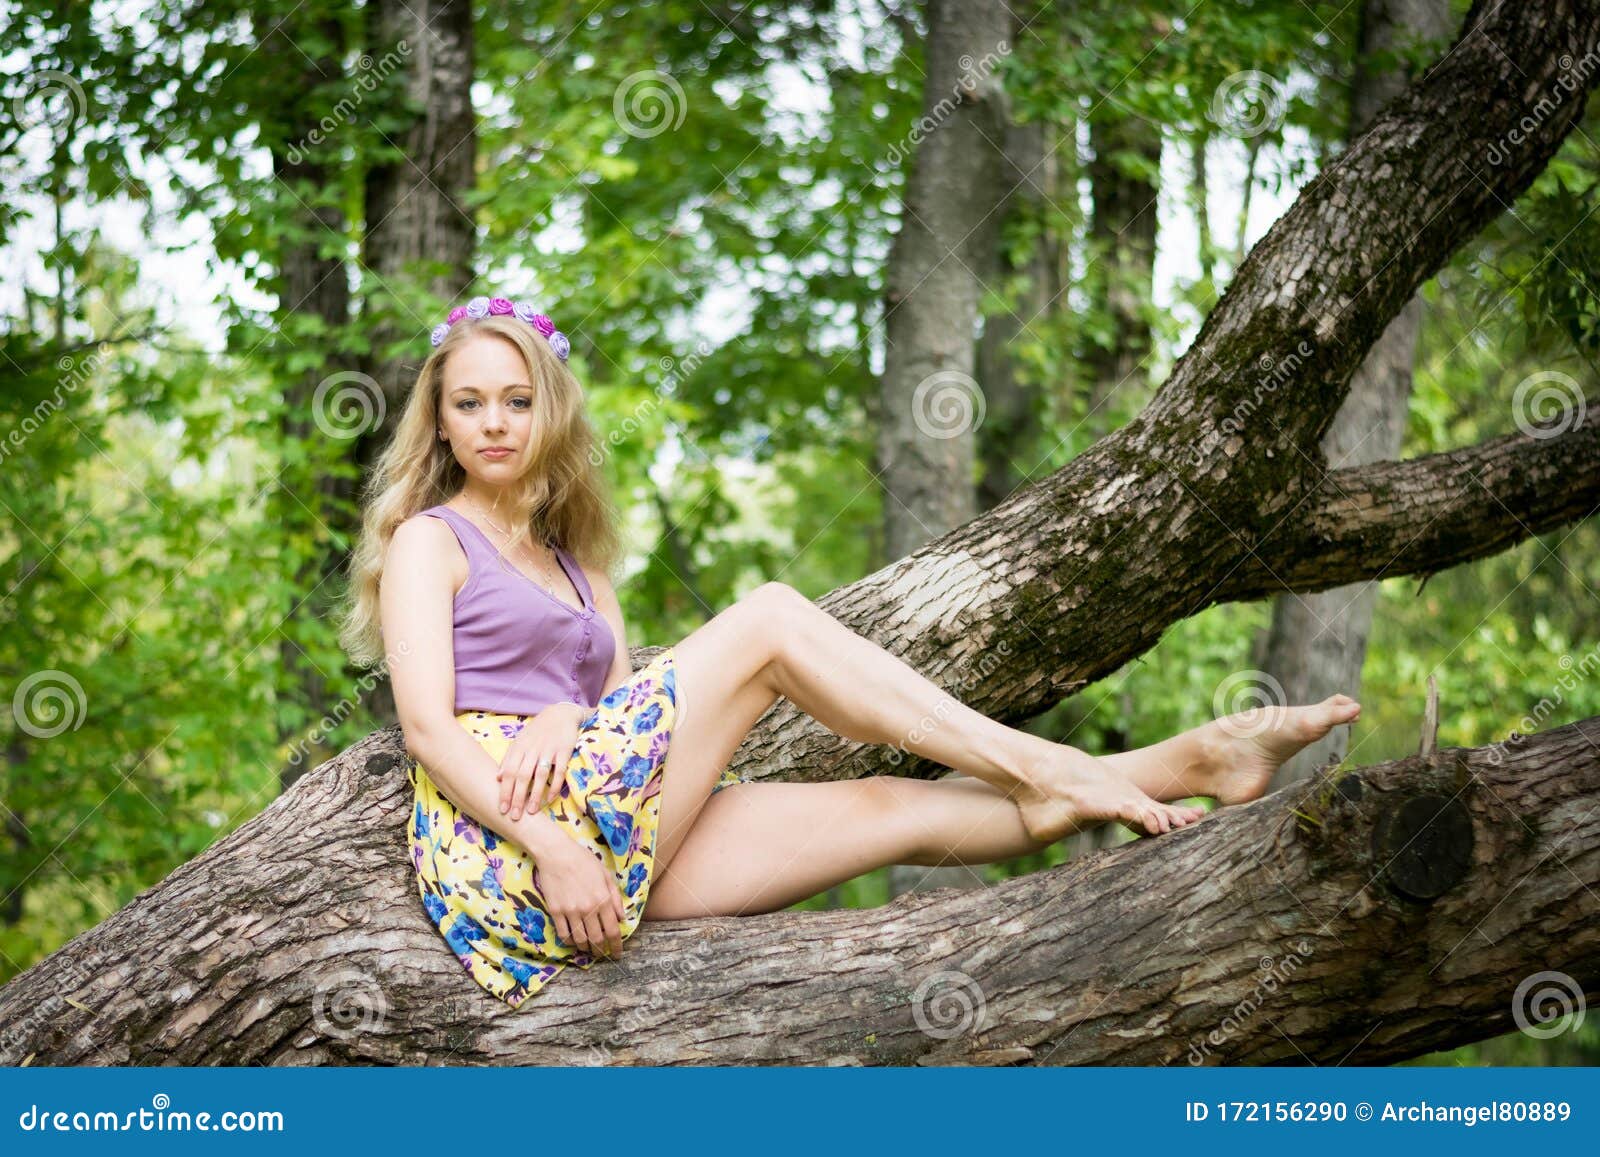 https://thumbs.dreamstime.com/z/girl-beautiful-legs-sitting-tree-girl-beautiful-legs-sitting-tree-any-purpose-172156290.jpg